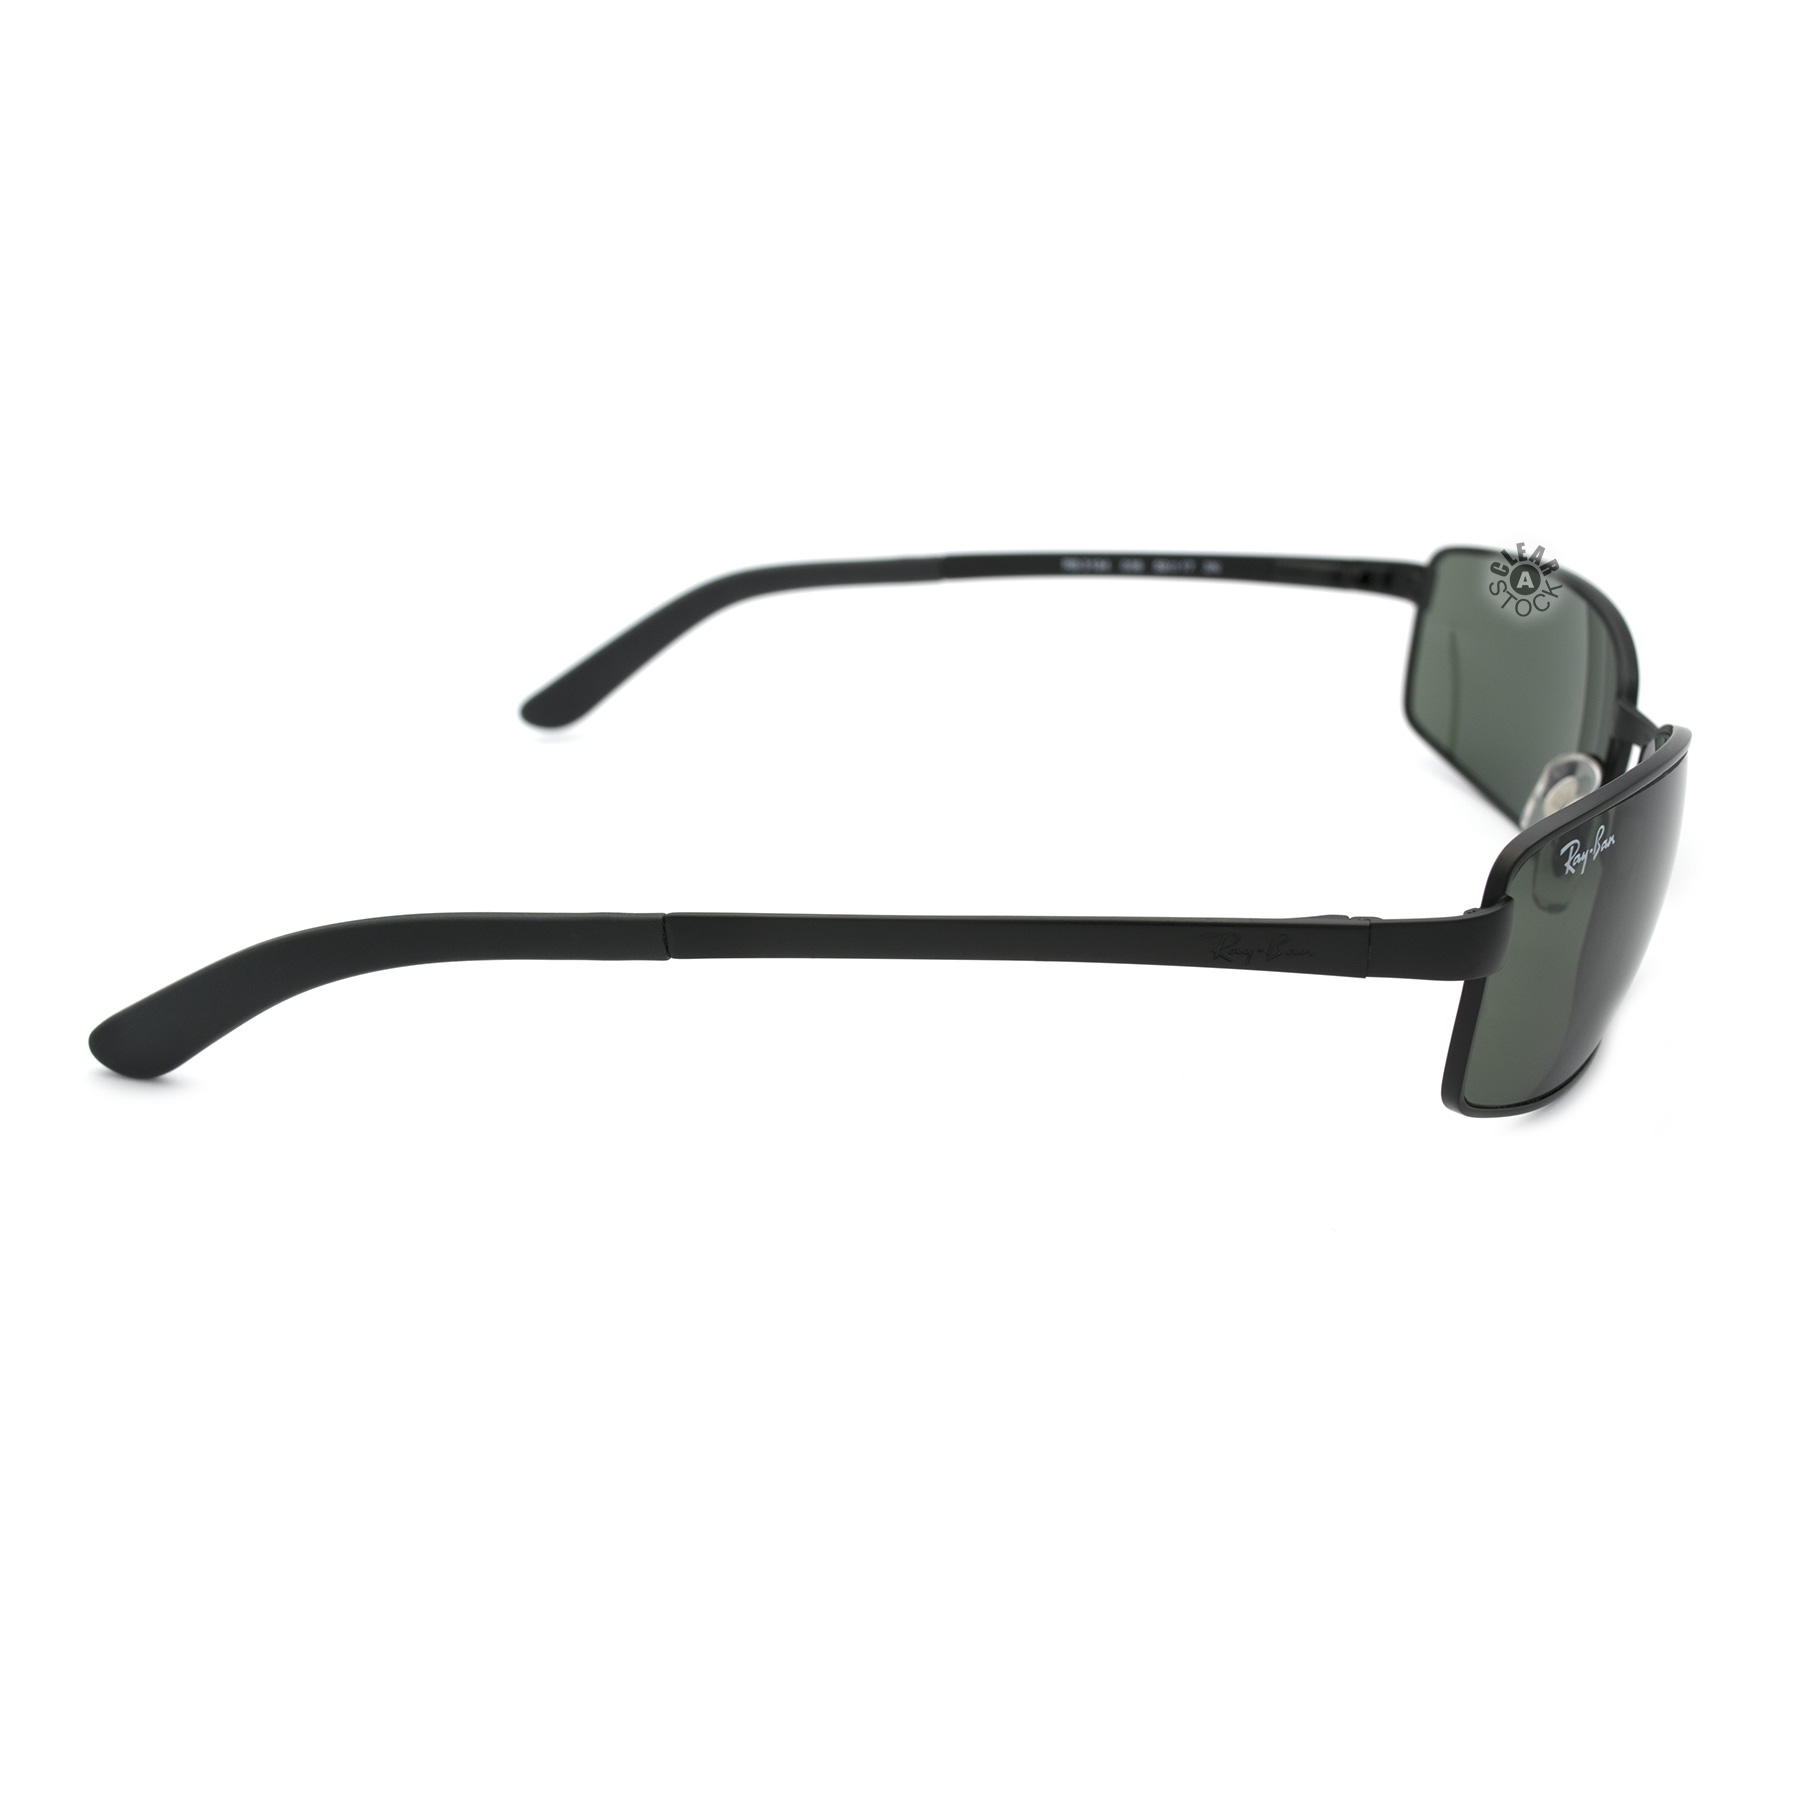 Ray-Ban Sunglasses 006 Matte Black/Green 59mm